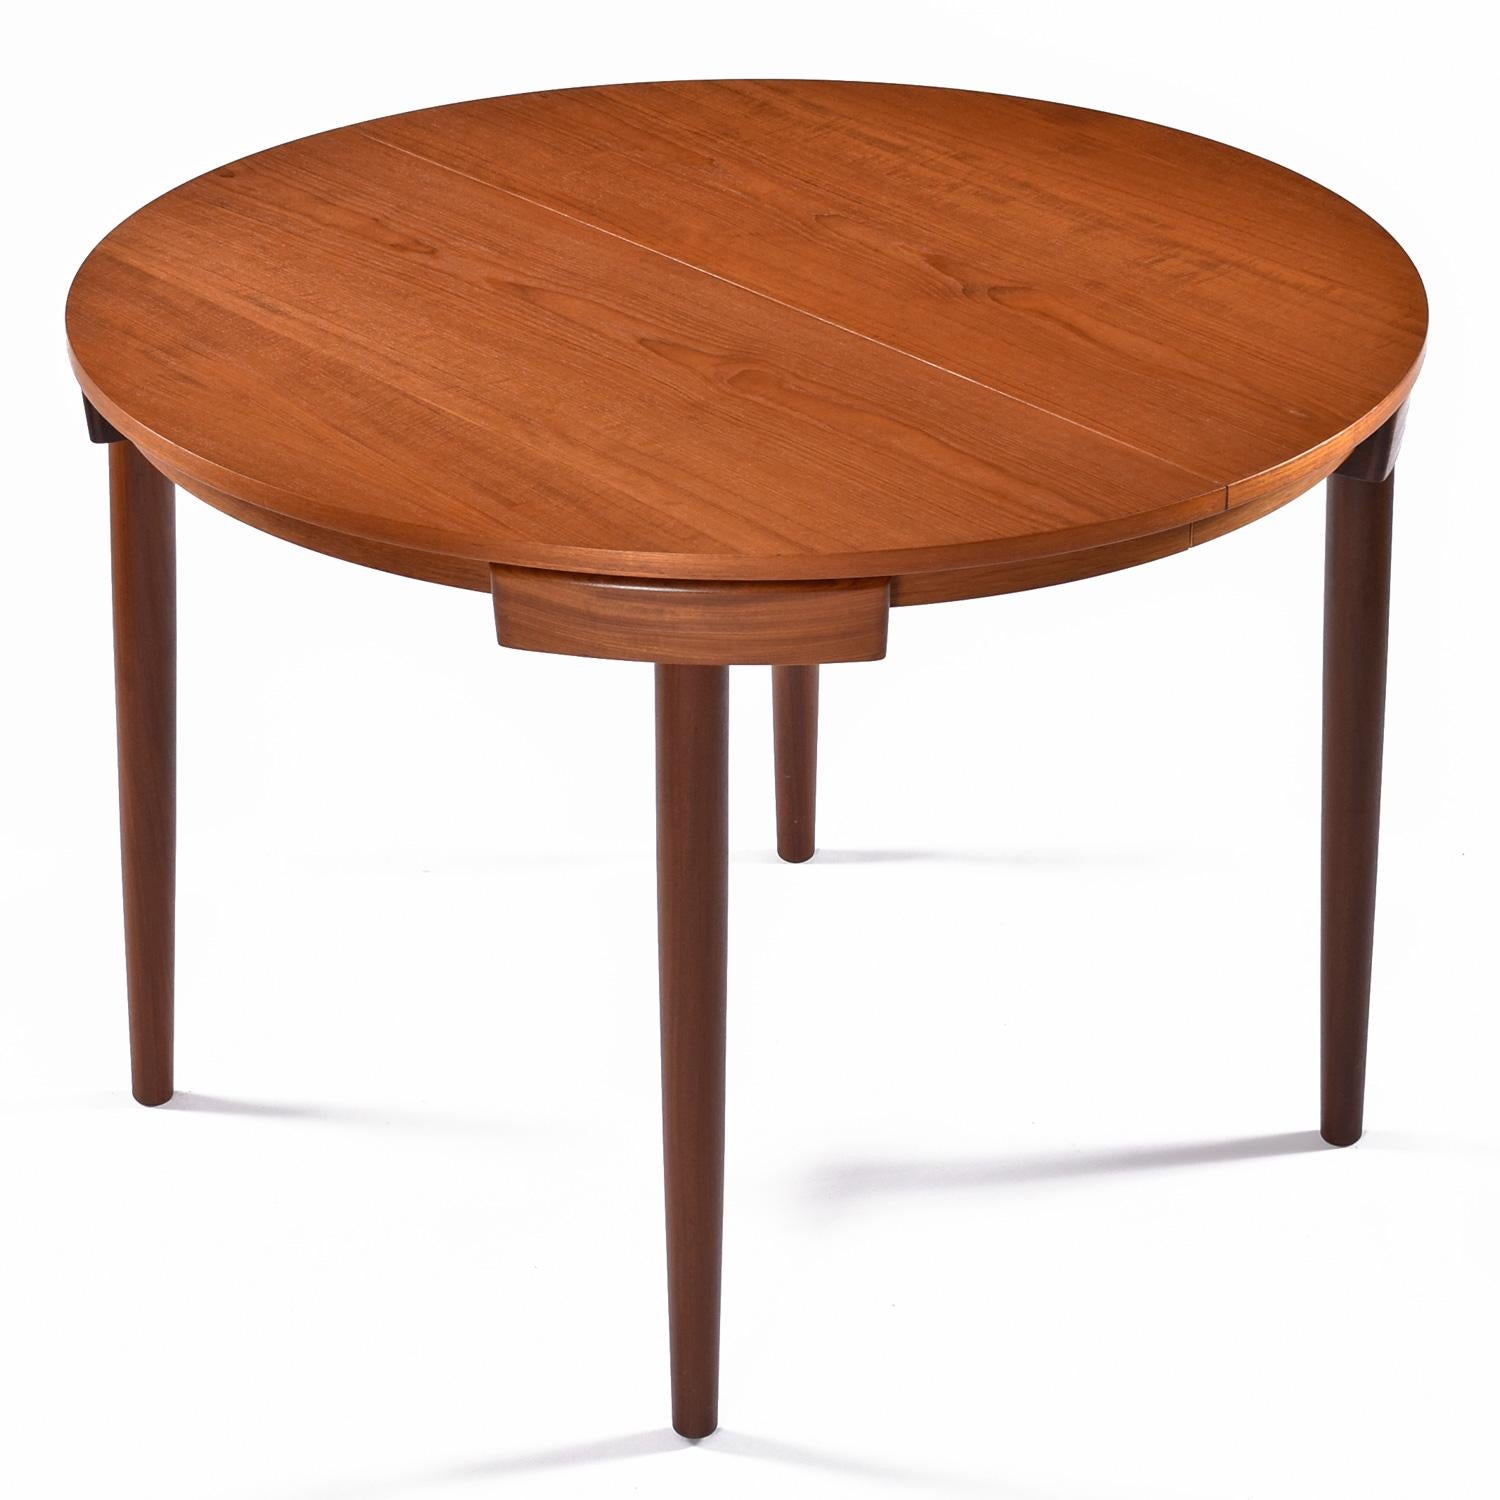 Teak Hans Olsen for Frem Rojle Roundette Butterfly Leaf Dining Table and '6' Chairs